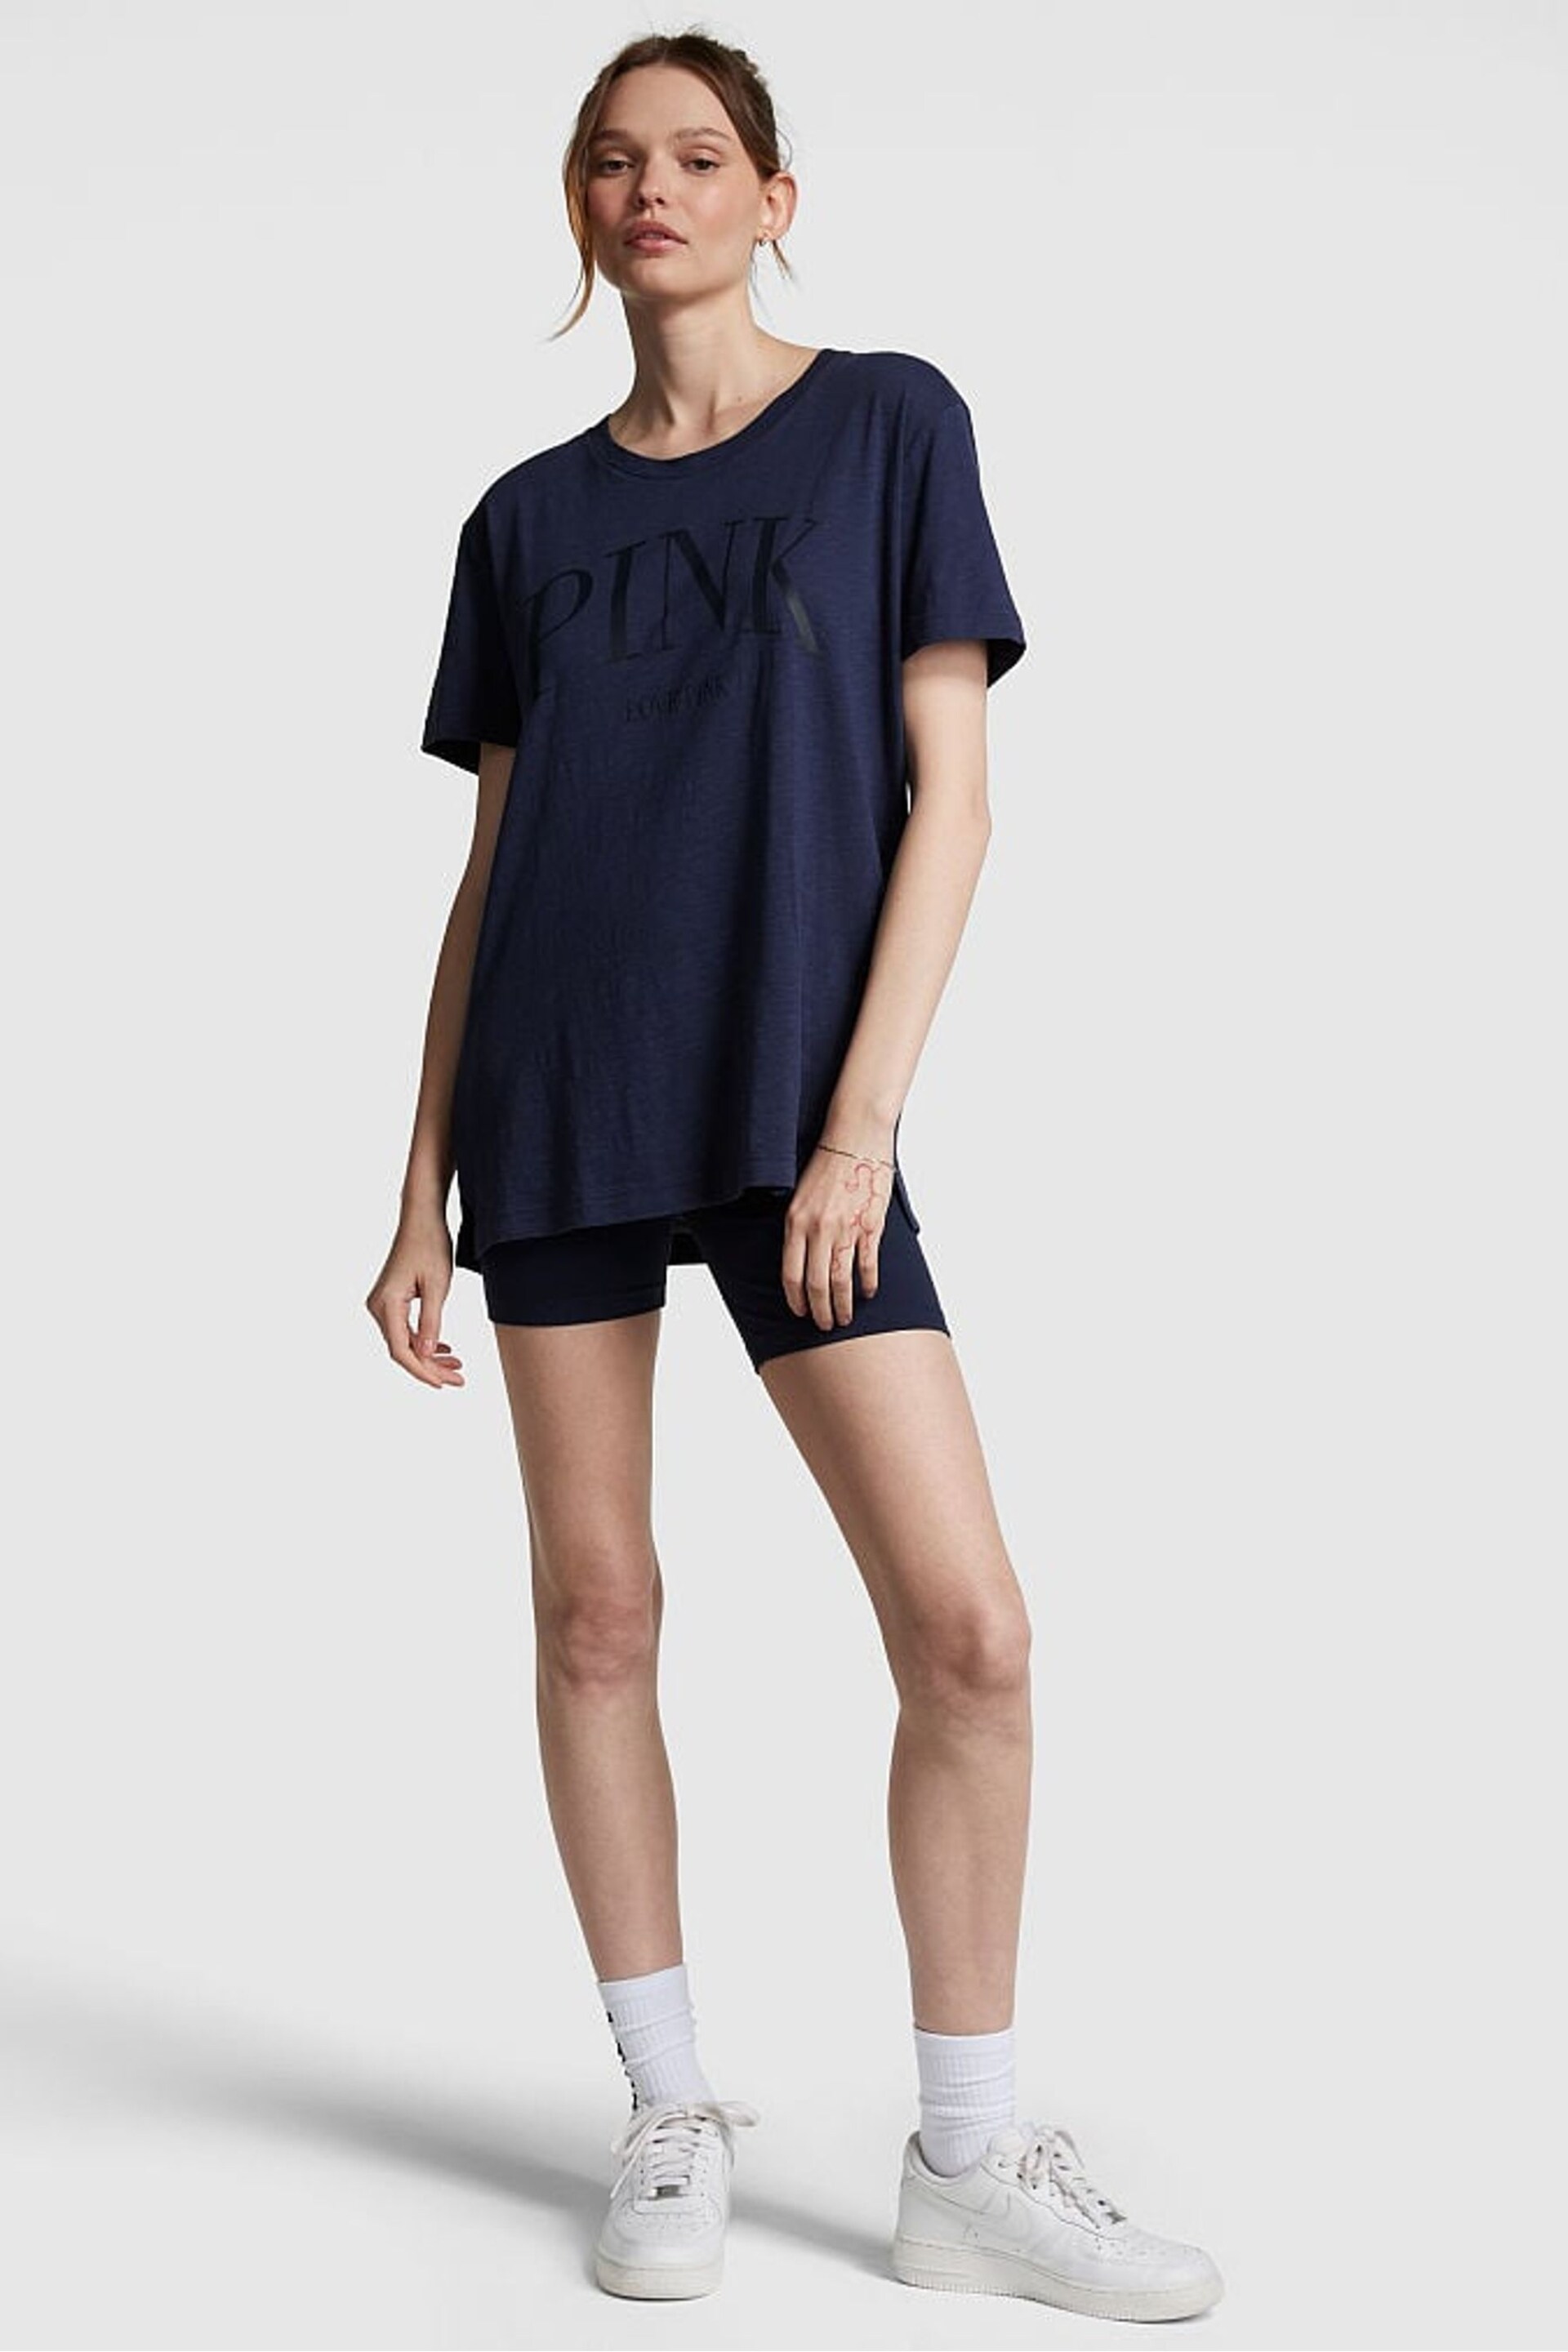 Victoria's Secret PINK Midnight Navy Blue Short Sleeve Slub T-Shirt - Image 3 of 4